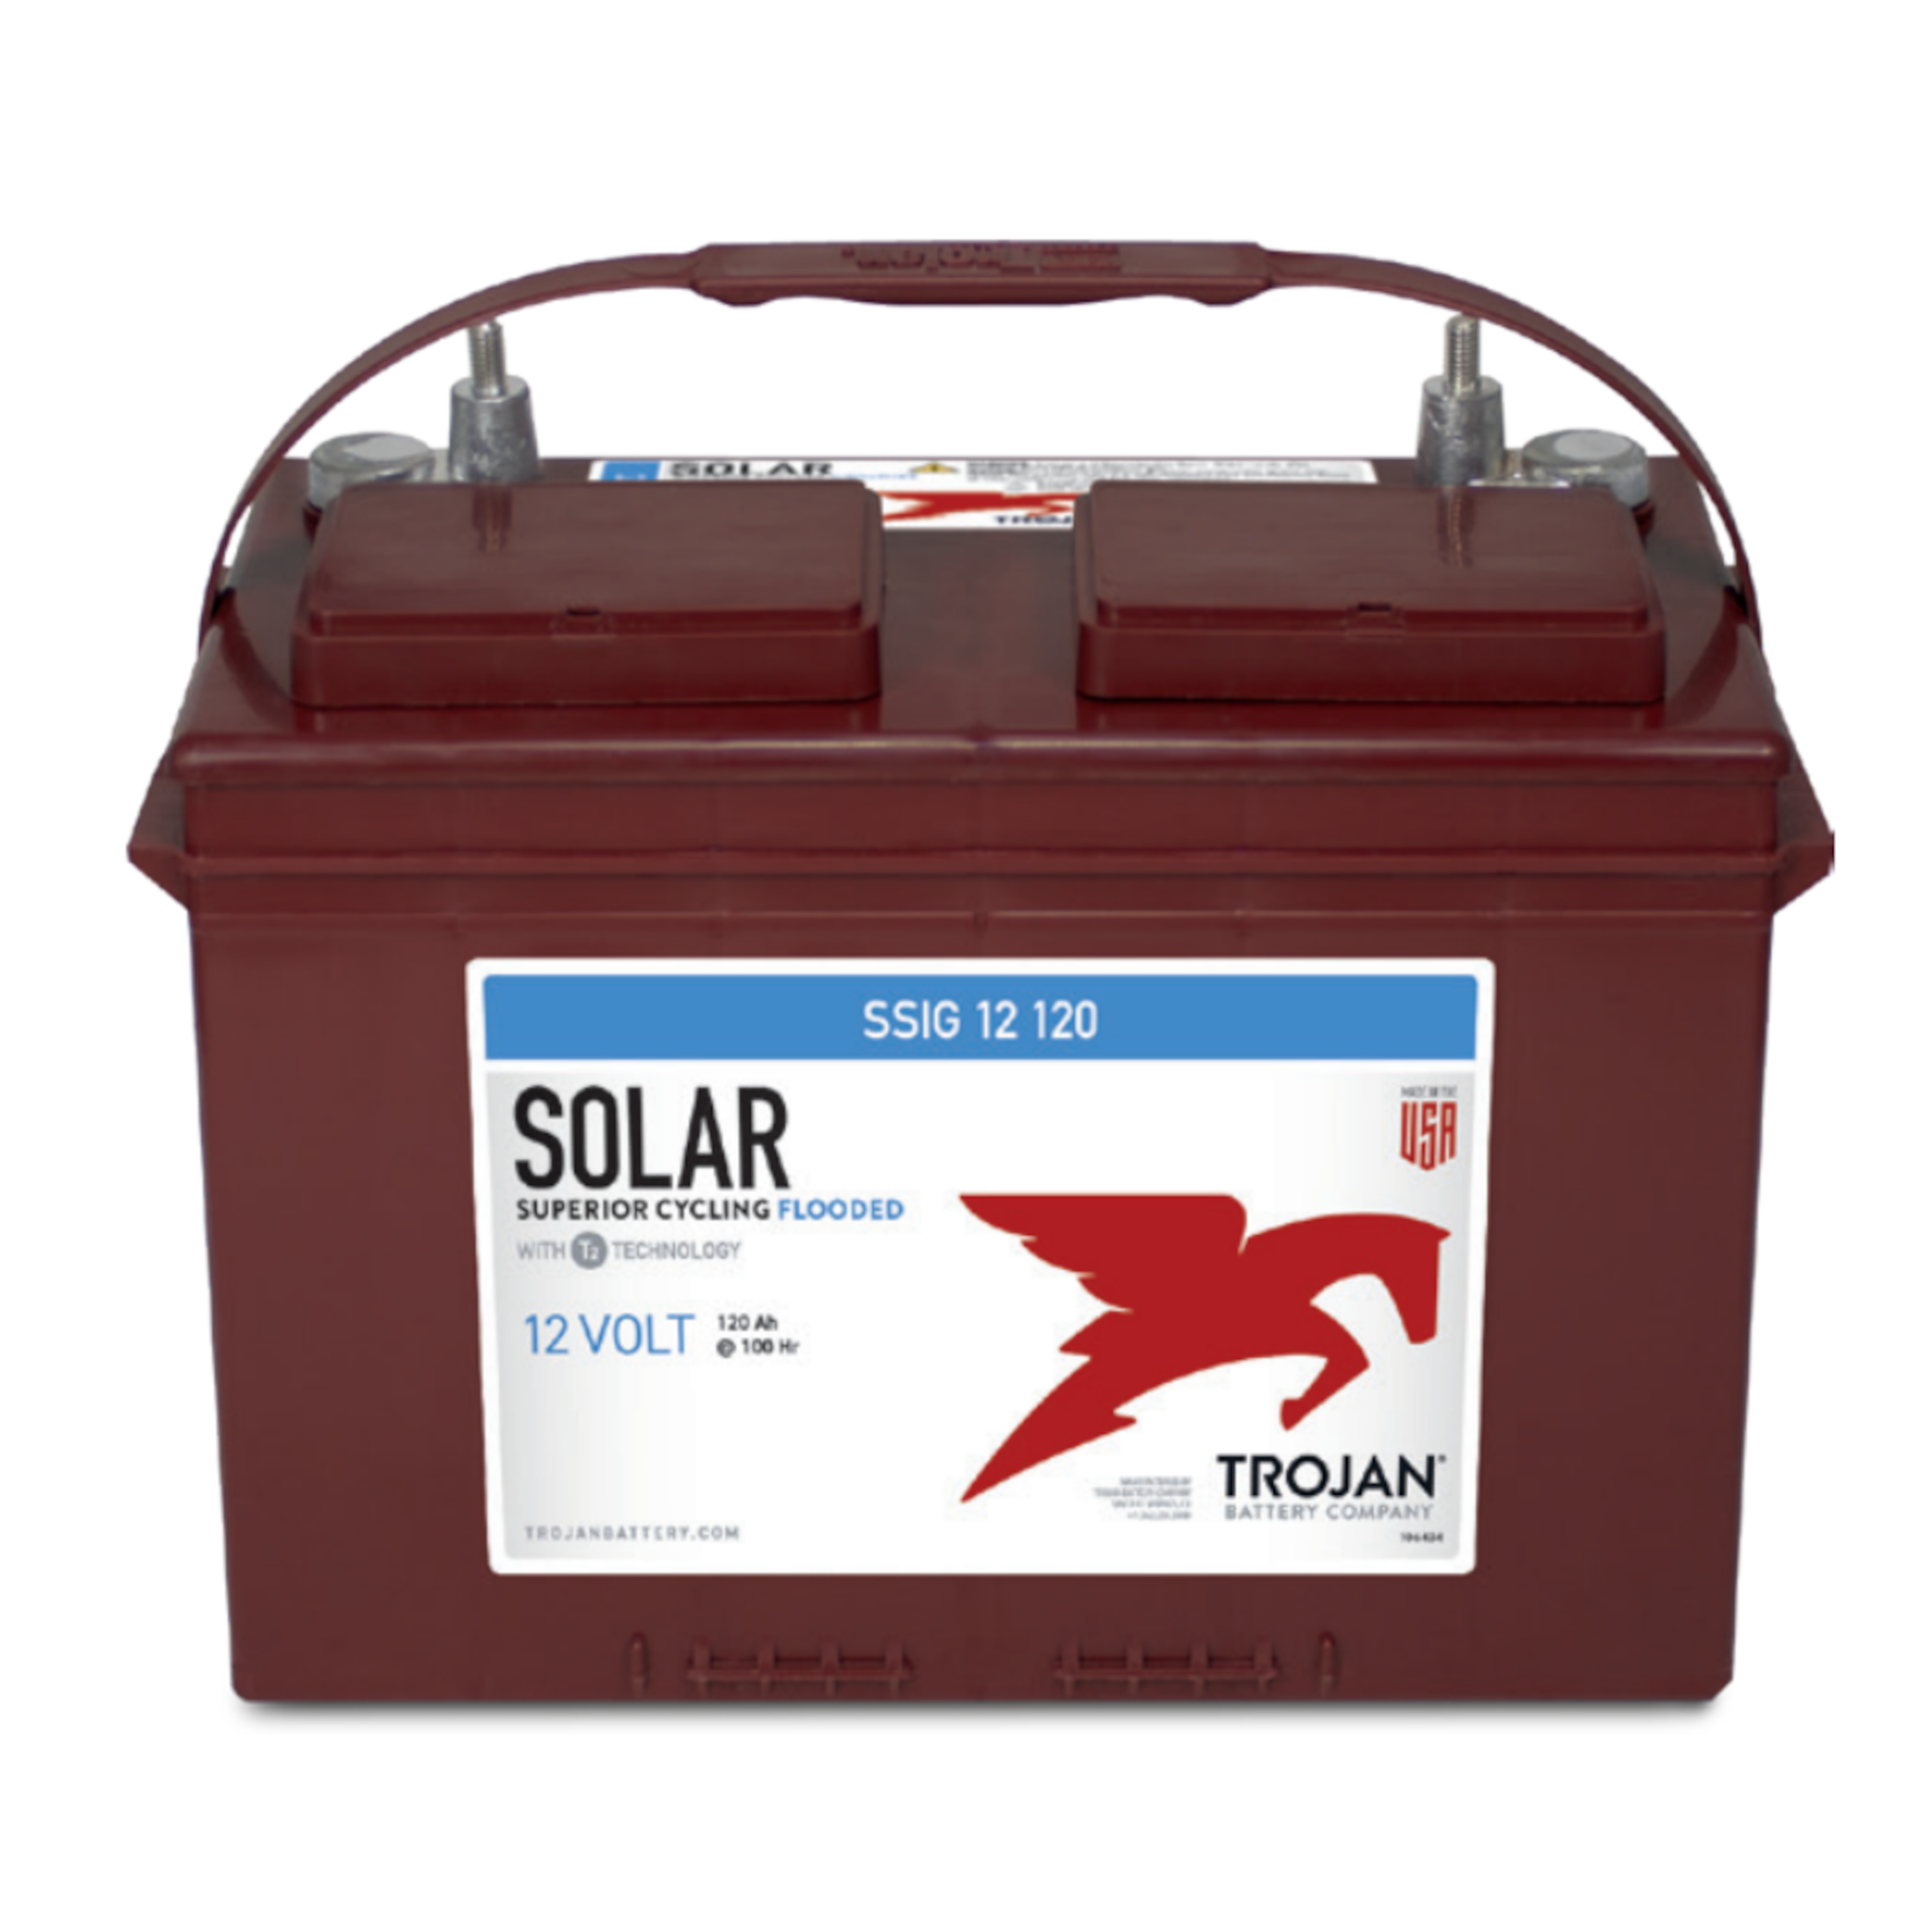 Trojan SSIG 12 120 12V Flooded Solar Battery